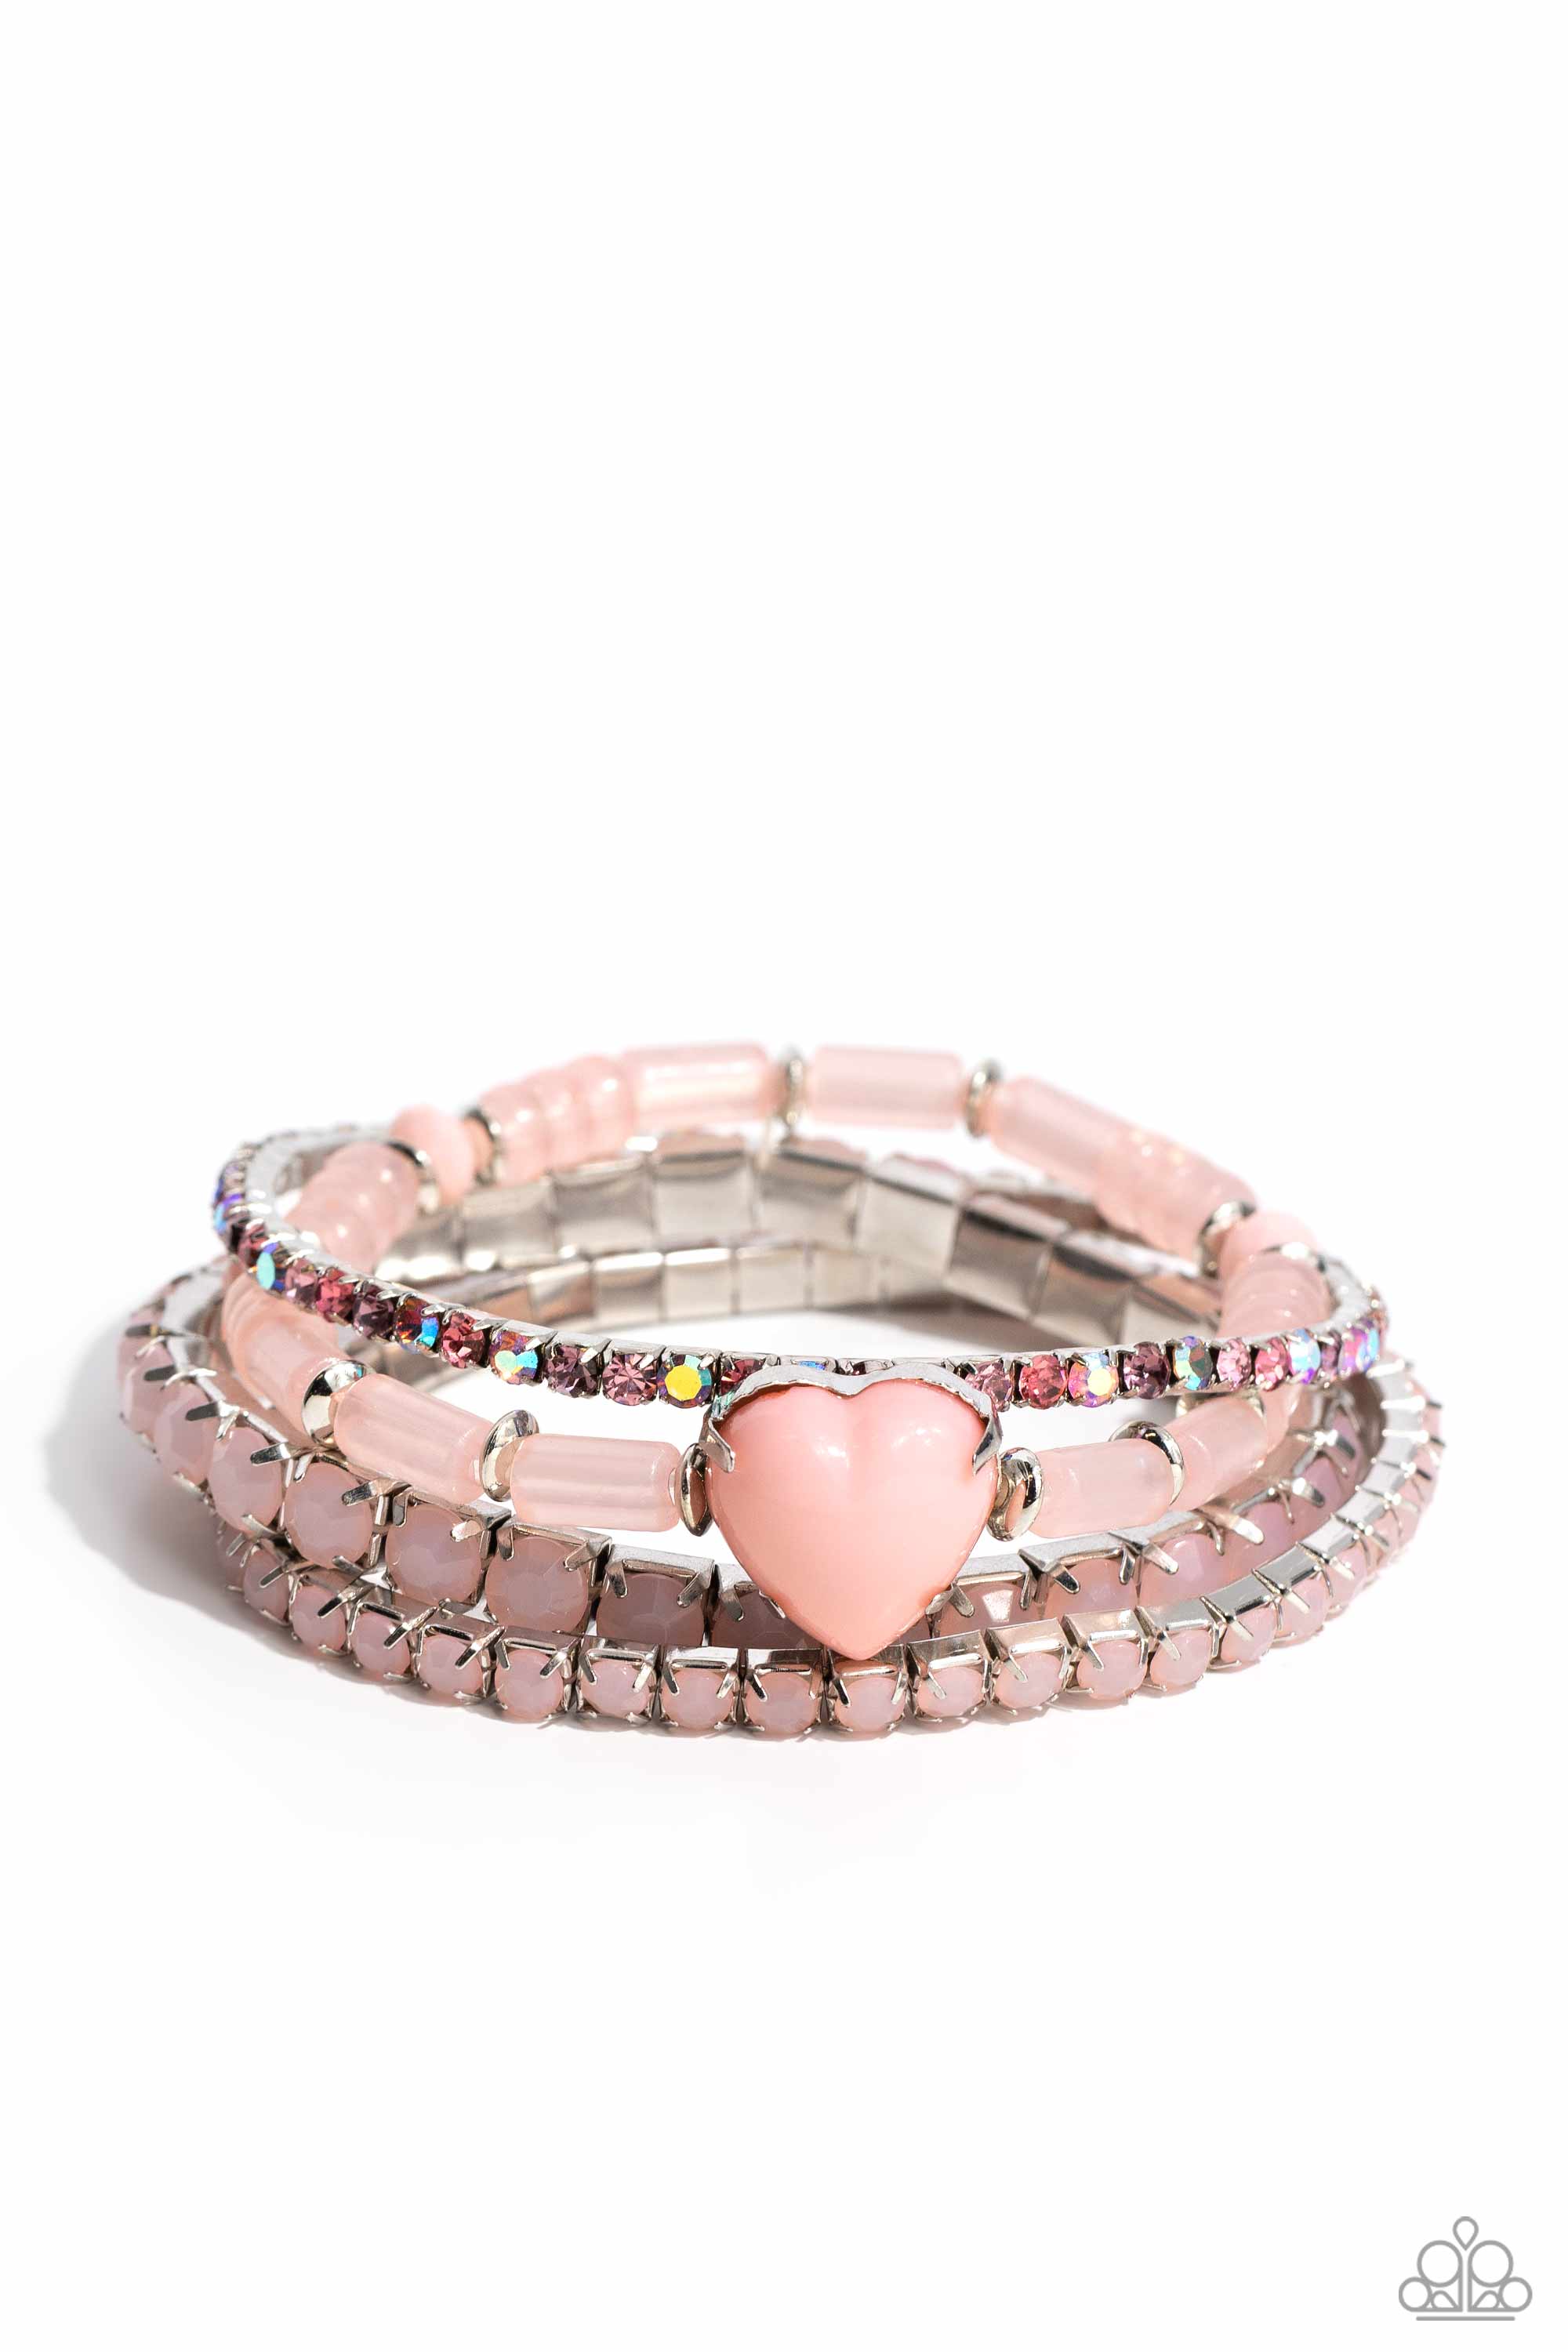 True Love's Theme Pink Bracelet - Paparazzi Accessories- lightbox - CarasShop.com - $5 Jewelry by Cara Jewels